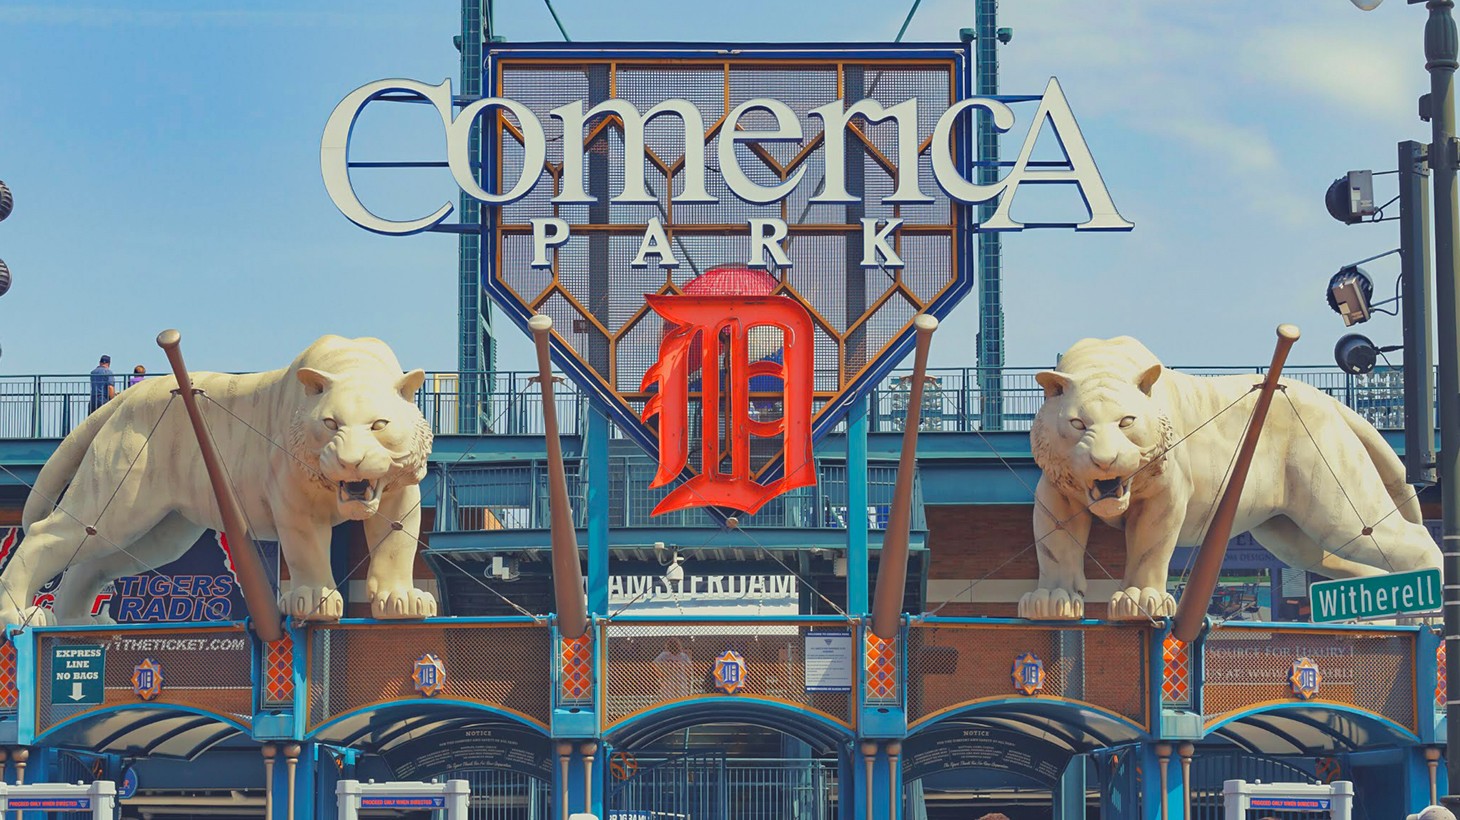 Detroit Tigers' Comerica Park might be baseball's best stadium